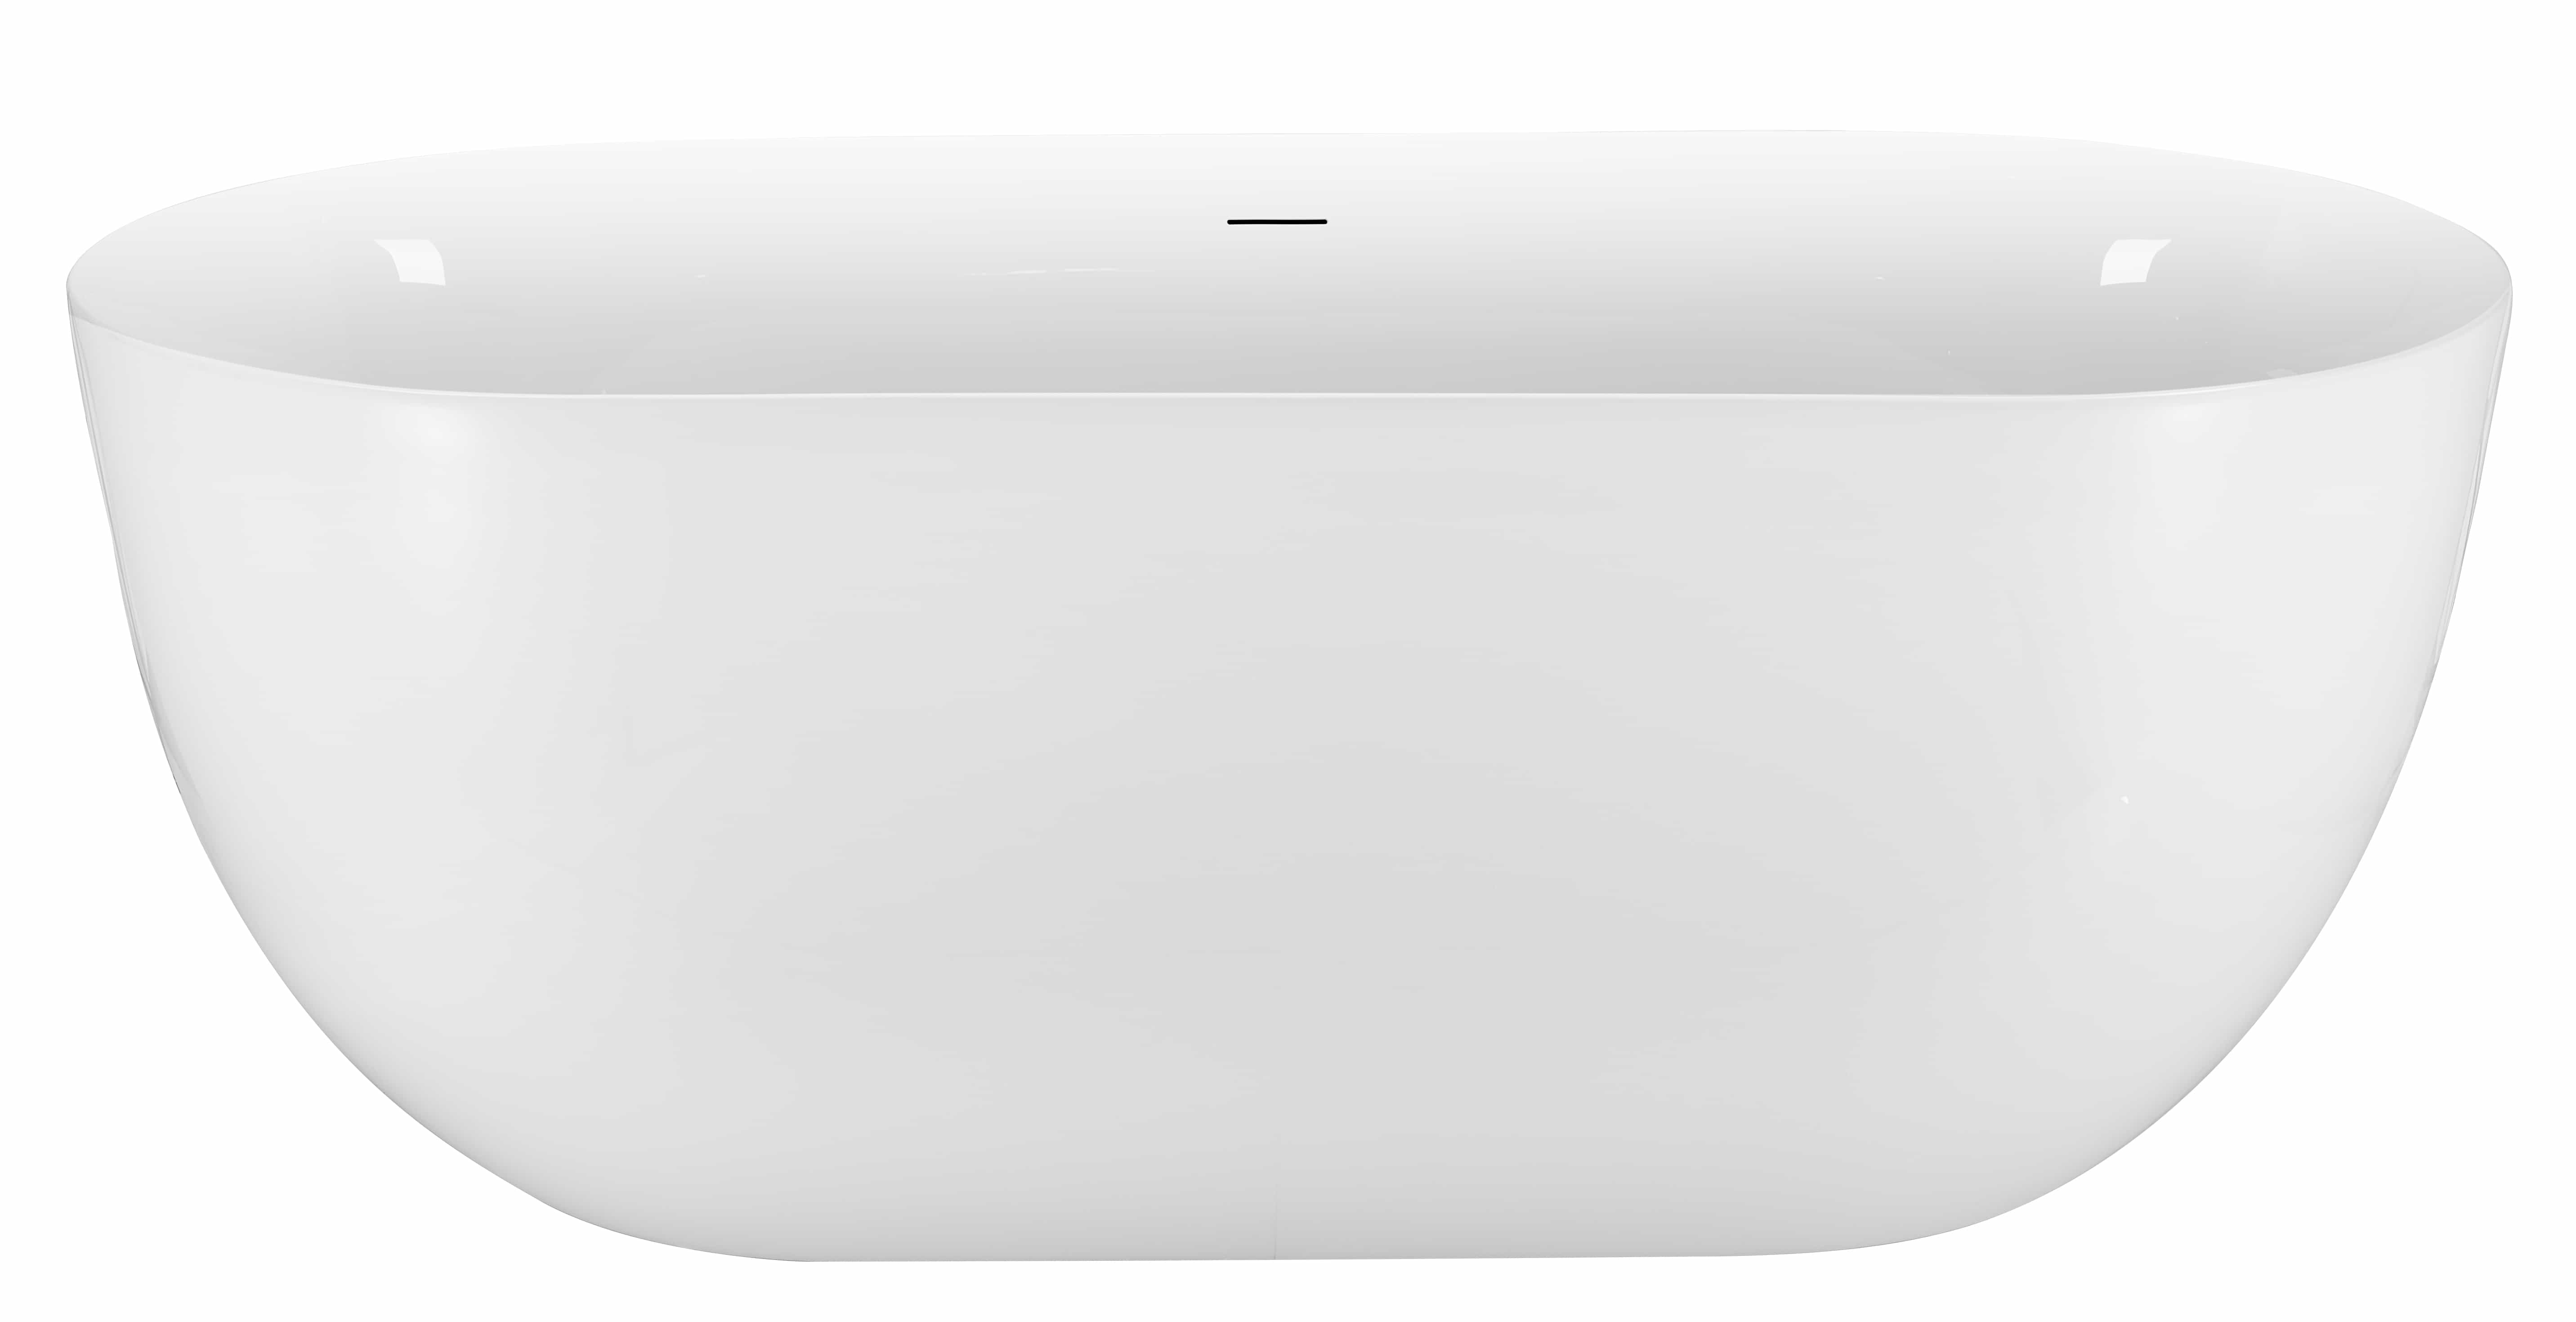 CASAINC 67" 100% Acrylic Freestanding Soaking Tub in White